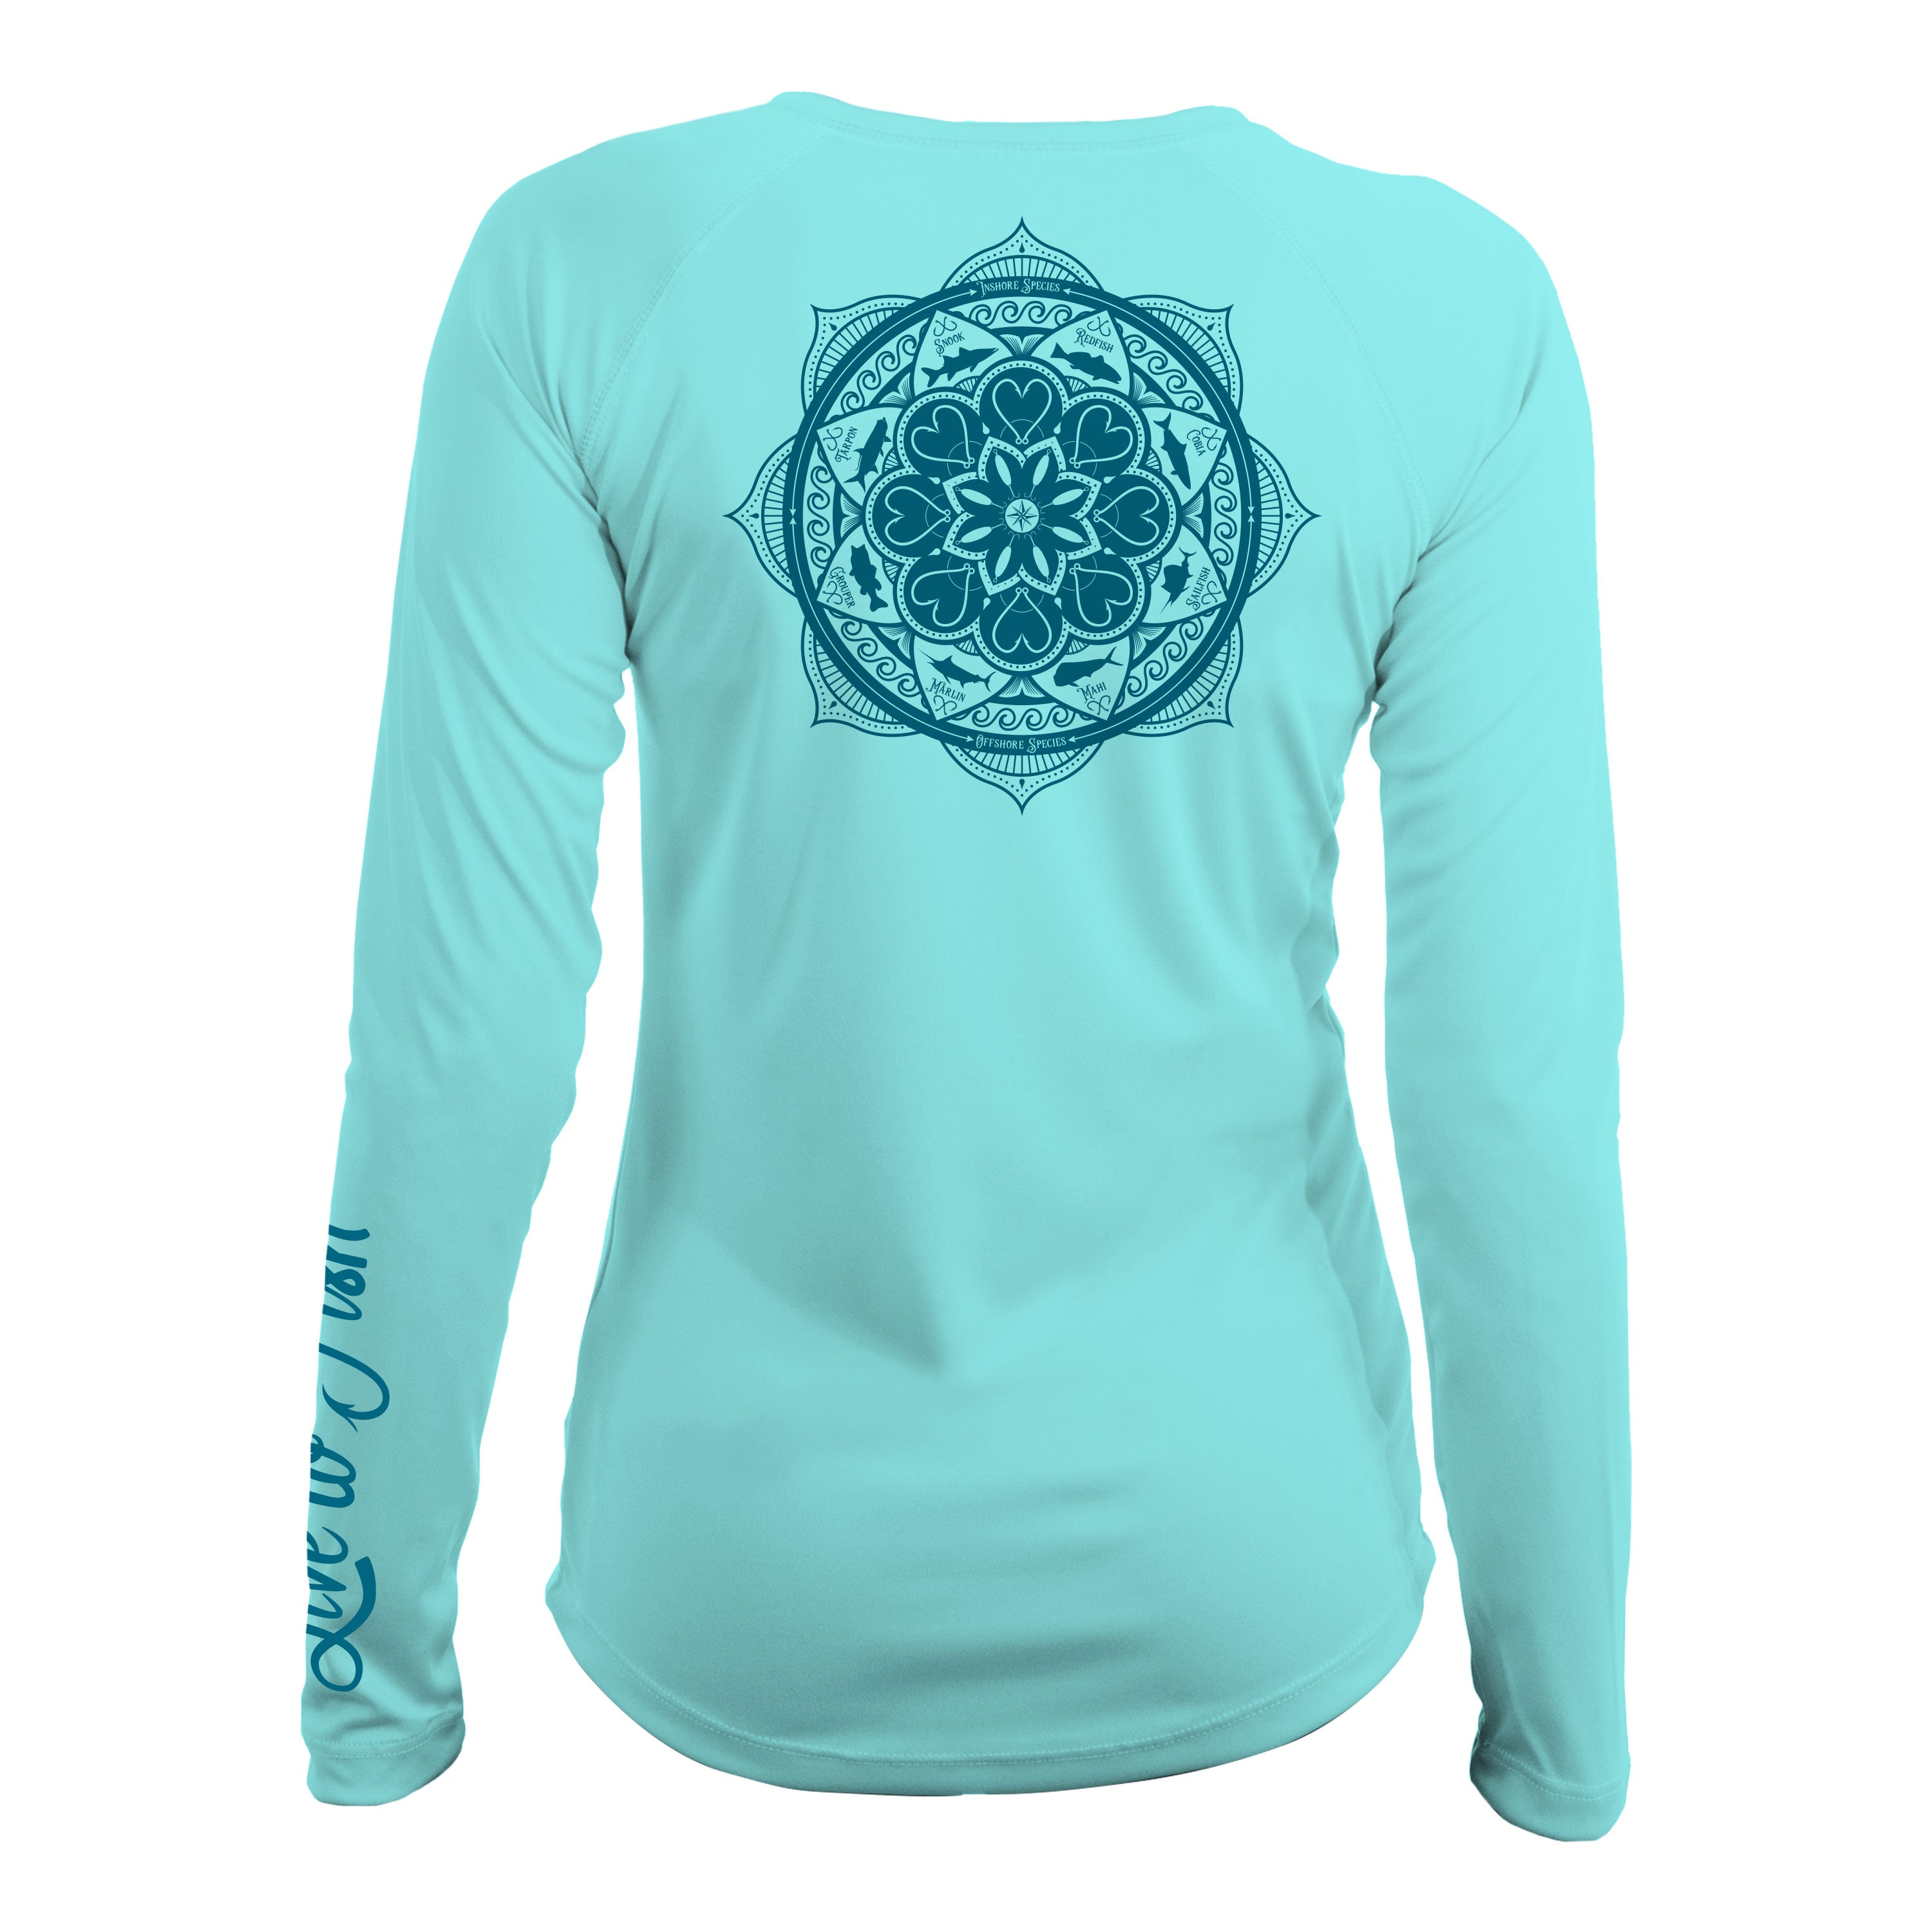 Mandala Women's Long Sleeve UV Shirt, Aqua Blue | Live to Fish Large